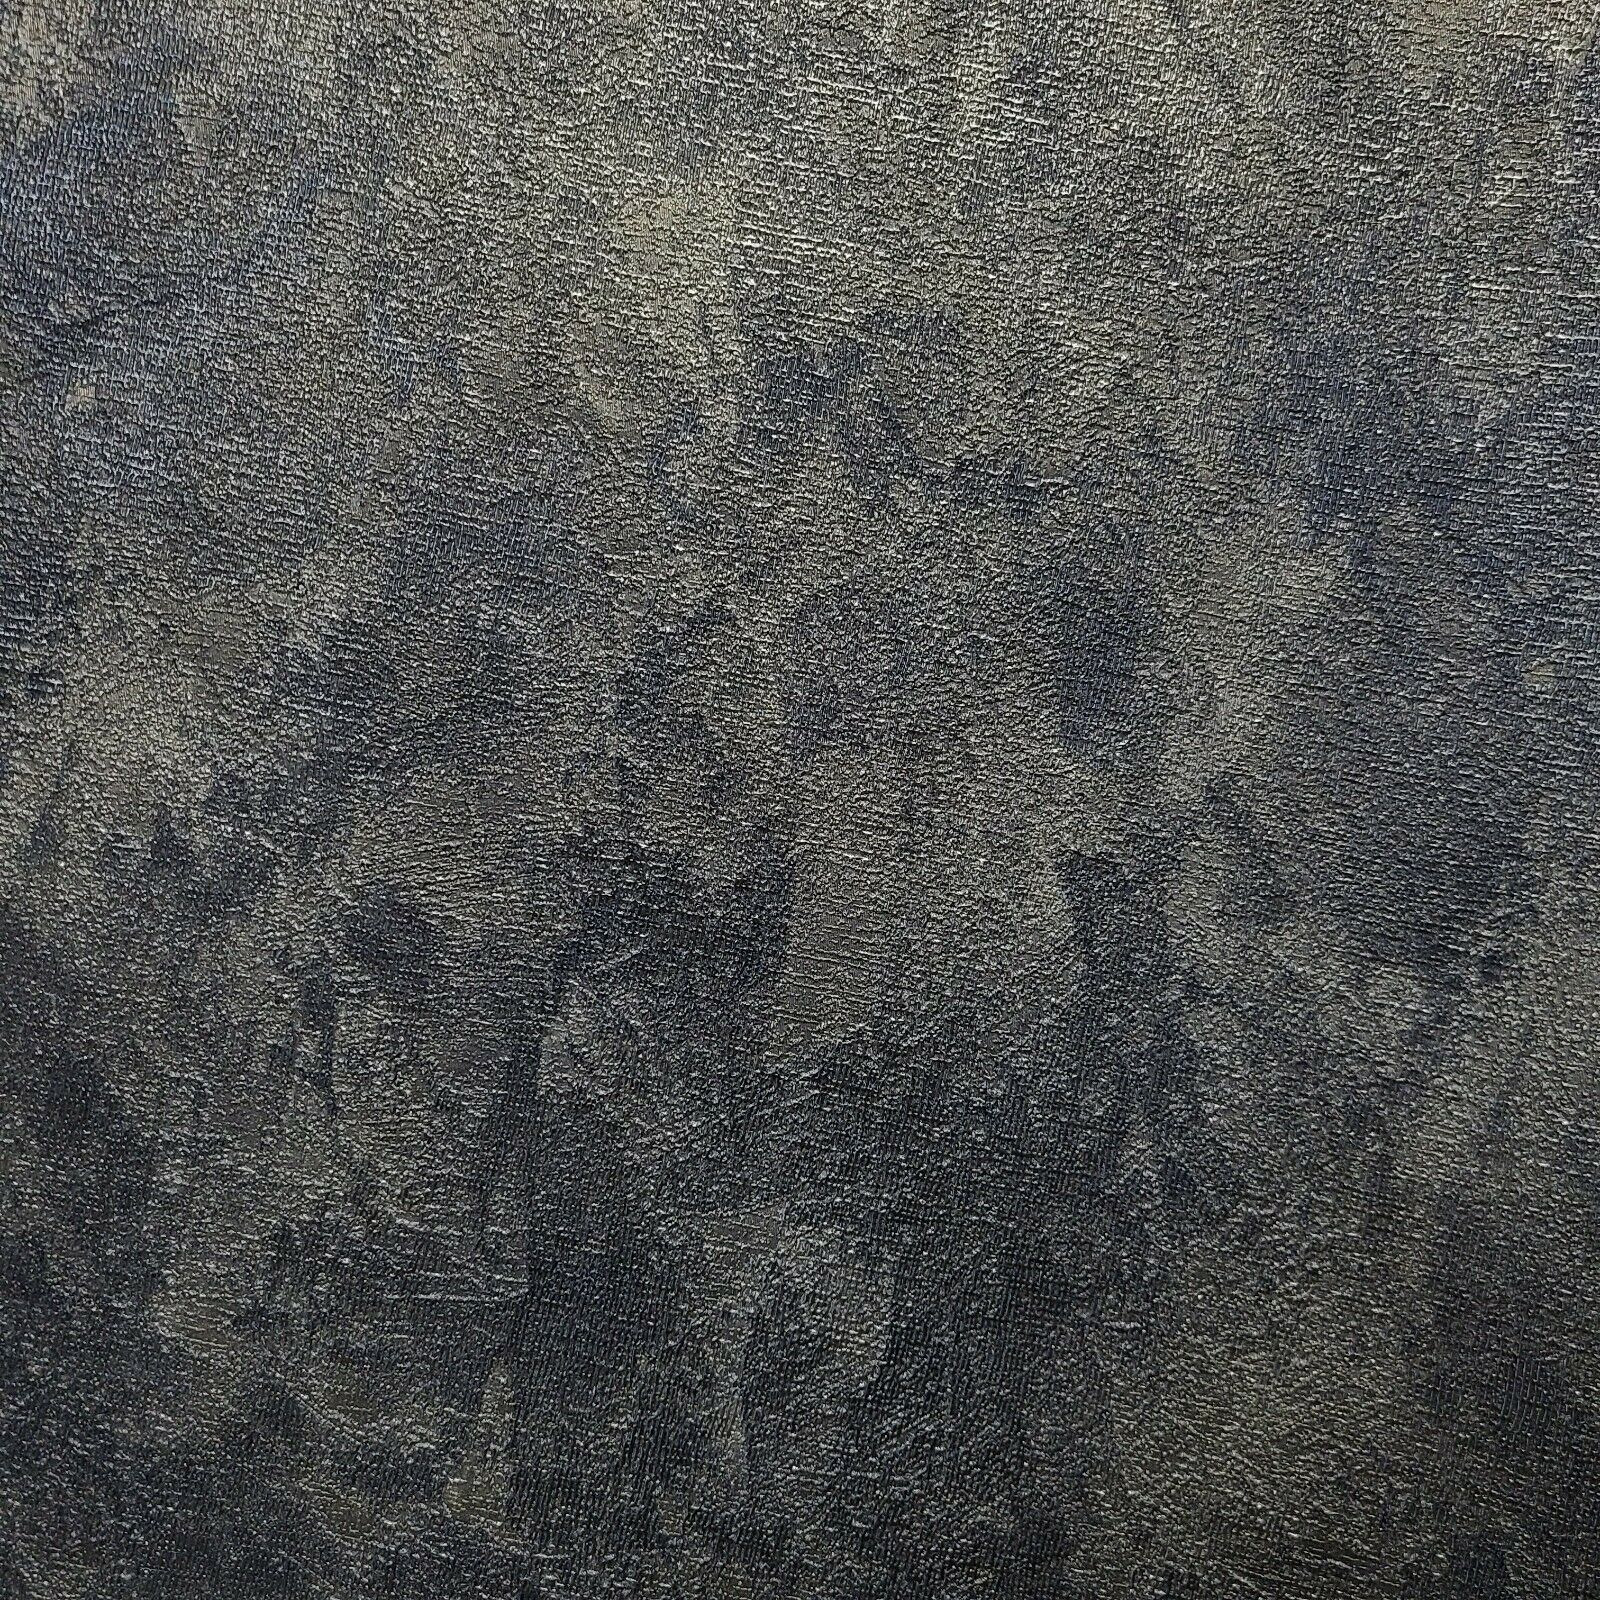 dark bronze texture